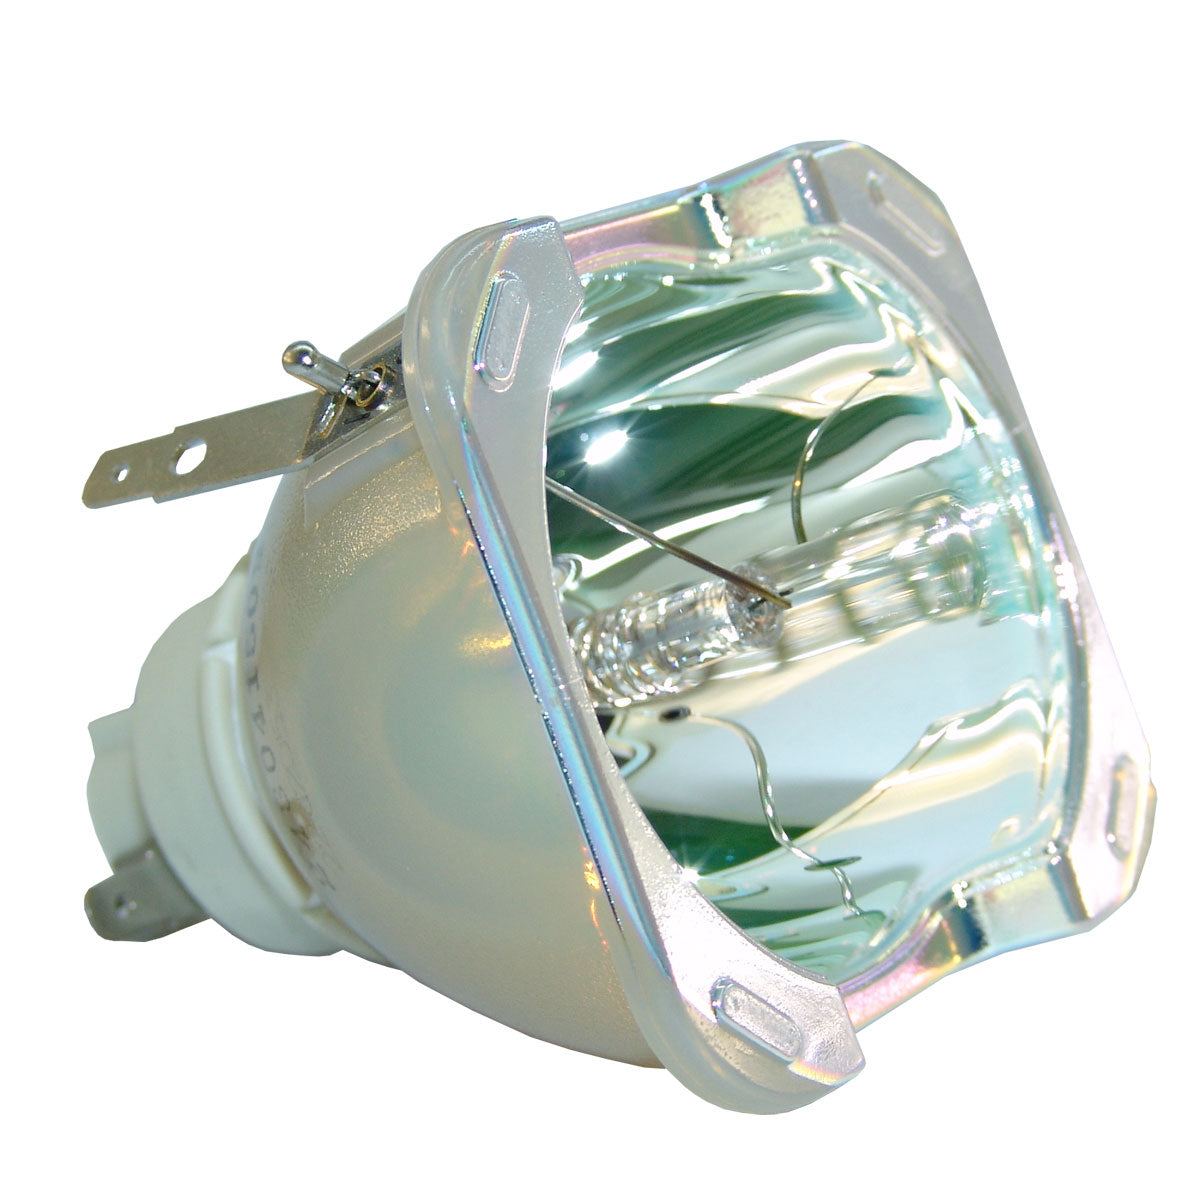 Eiki AH-CD3010 Philips Projector Bare Lamp